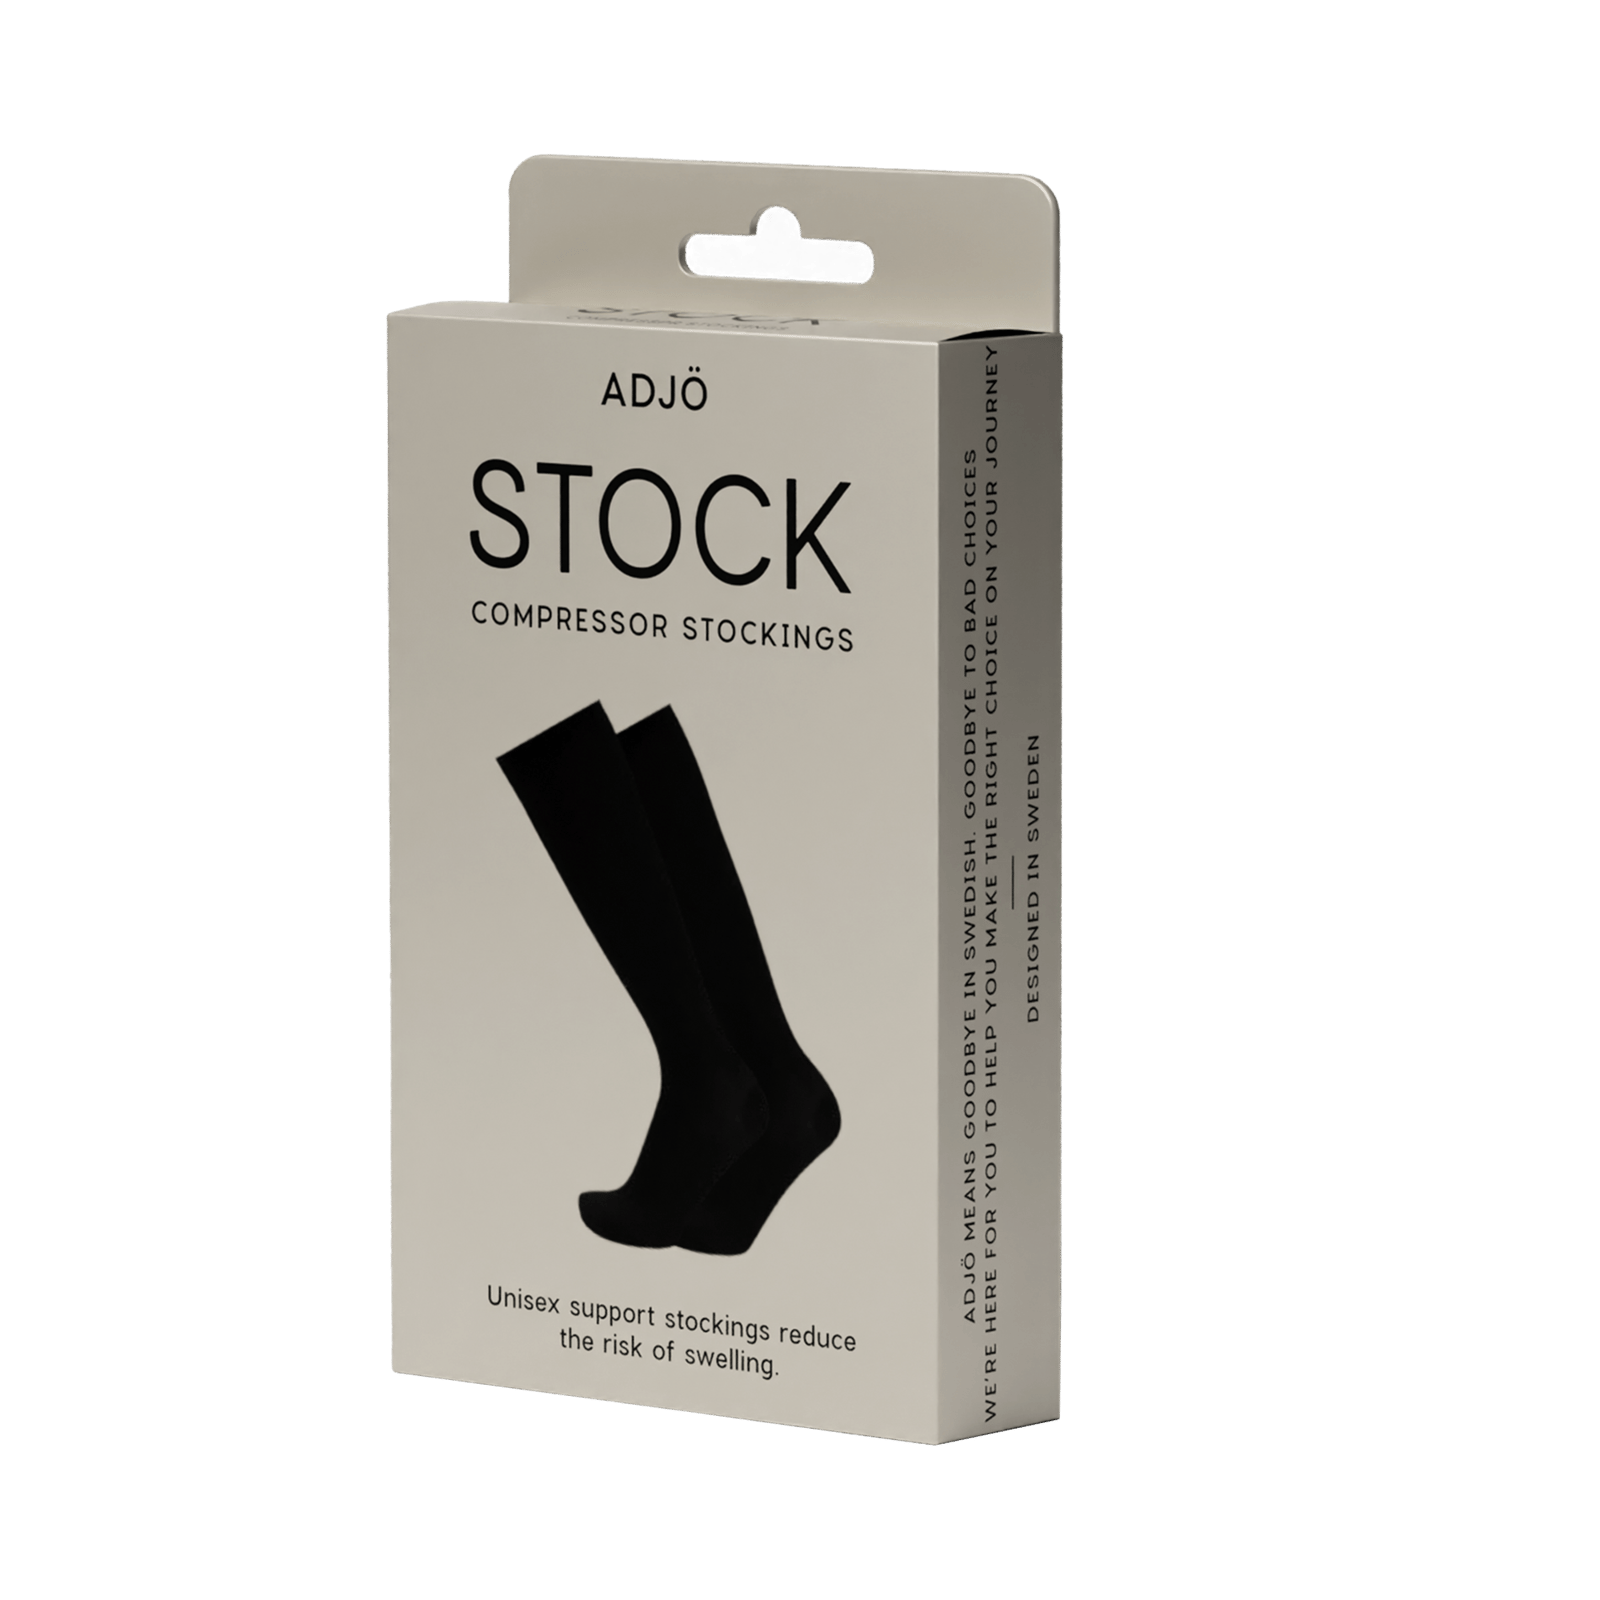 ADJÖ STOCK Compressor Stockings